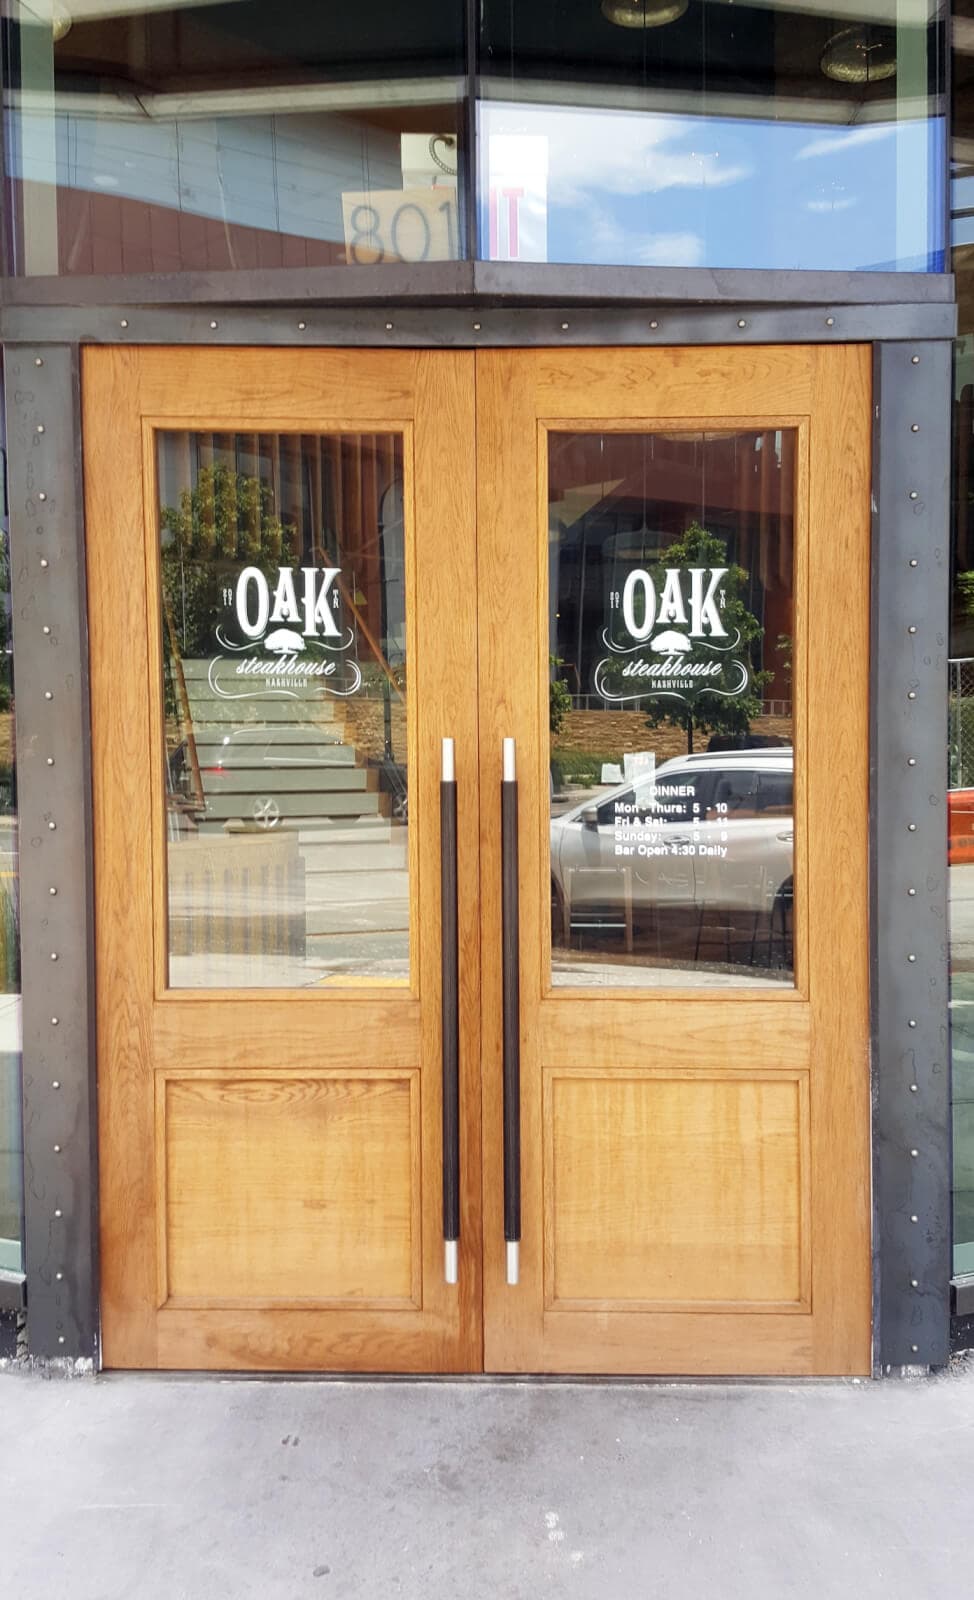 Window vinyl for the Oak Steakhouse by 12-Point SignWorks in Franklin, TN.